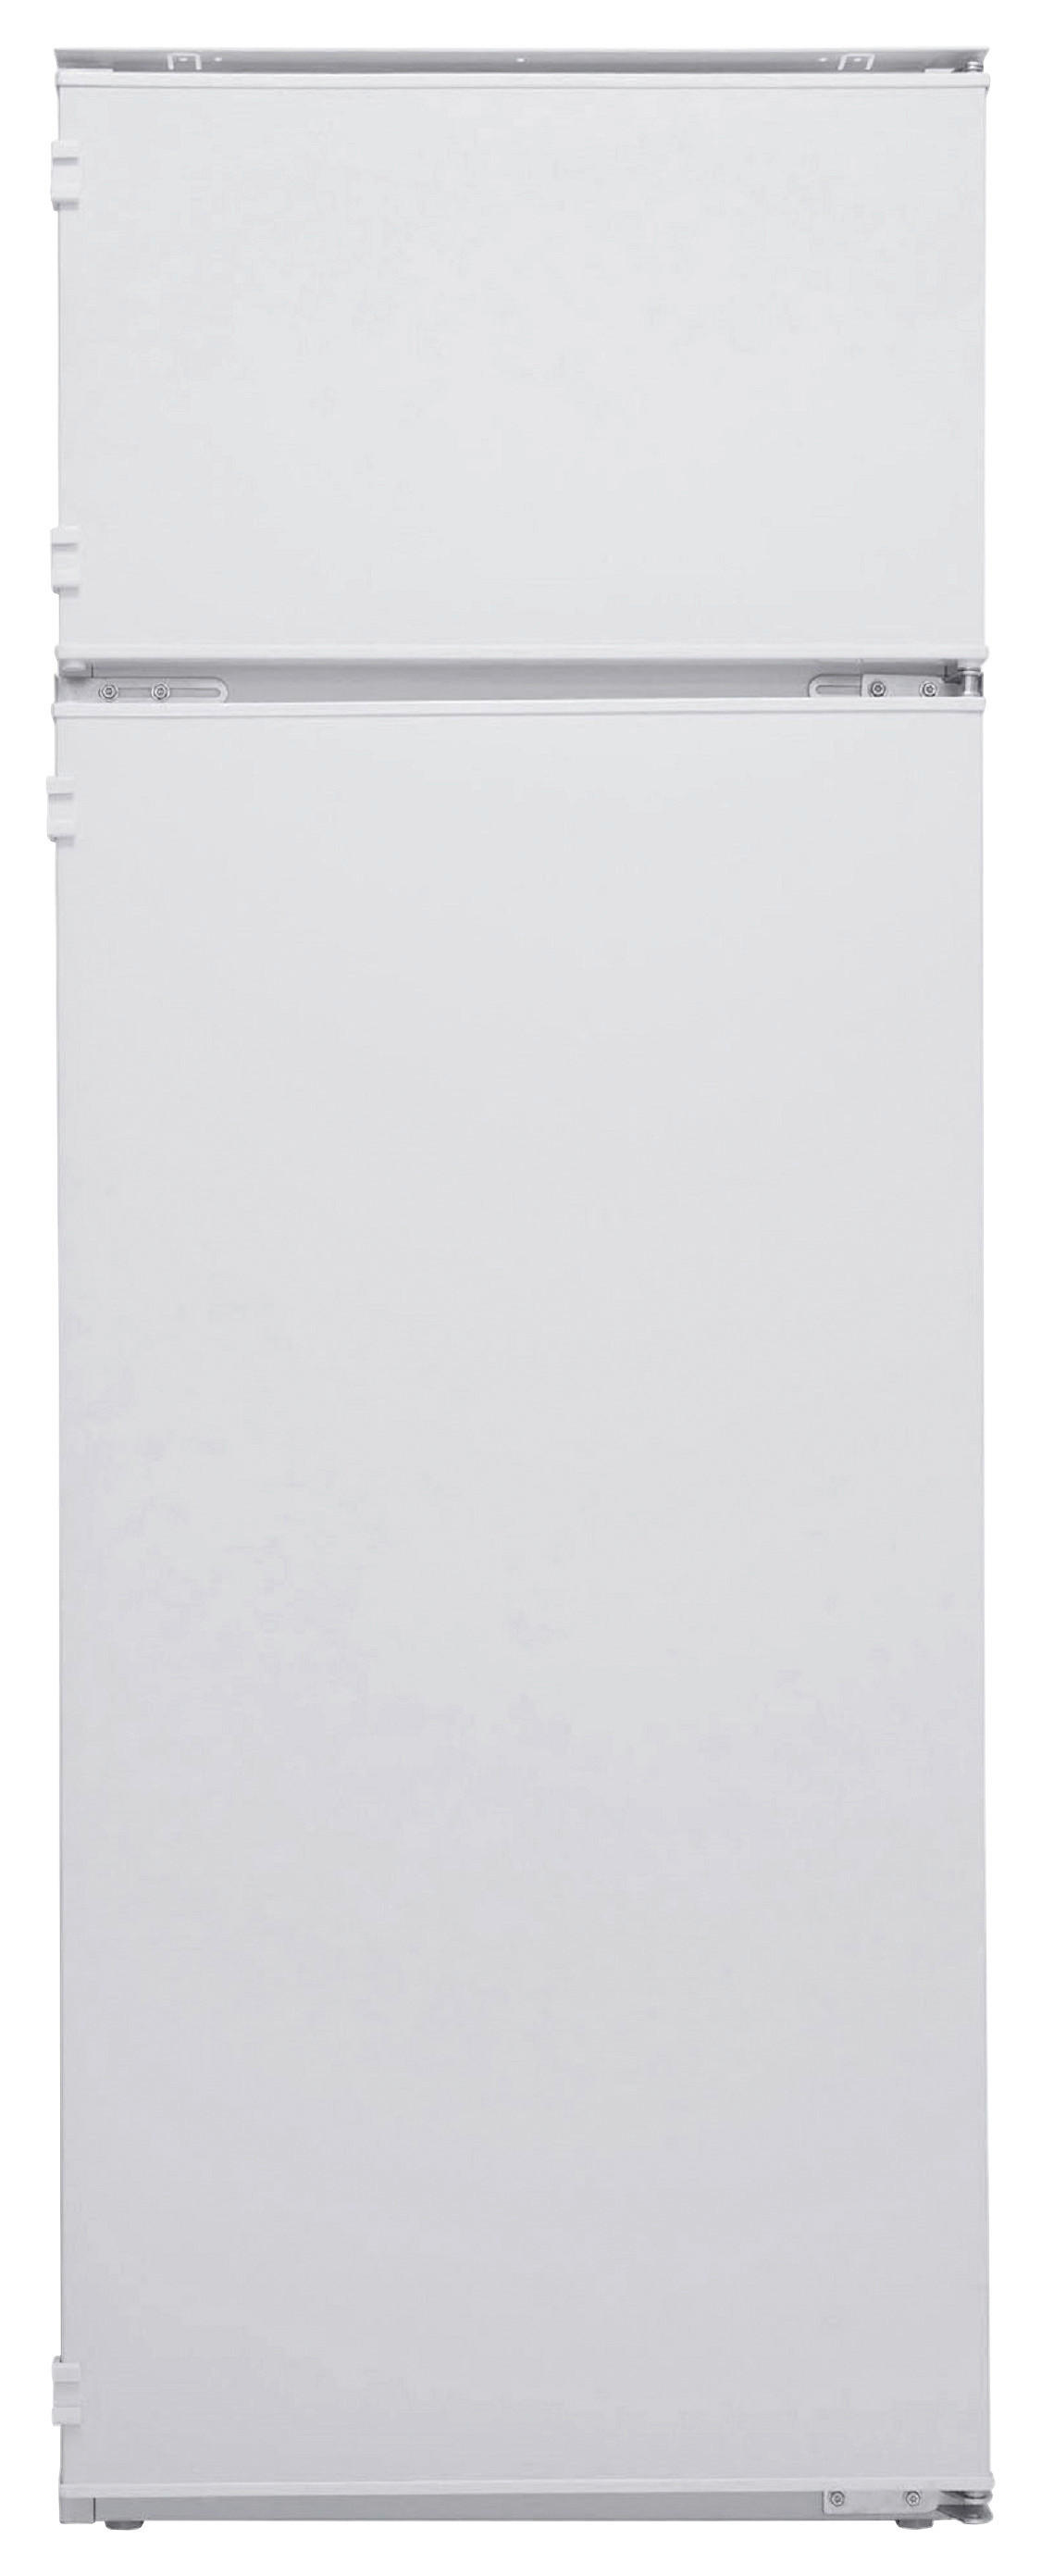 KÜHLSCHRANK GKE144  - Weiß, Trend, Glas/Kunststoff (54/144/54cm) - Respekta